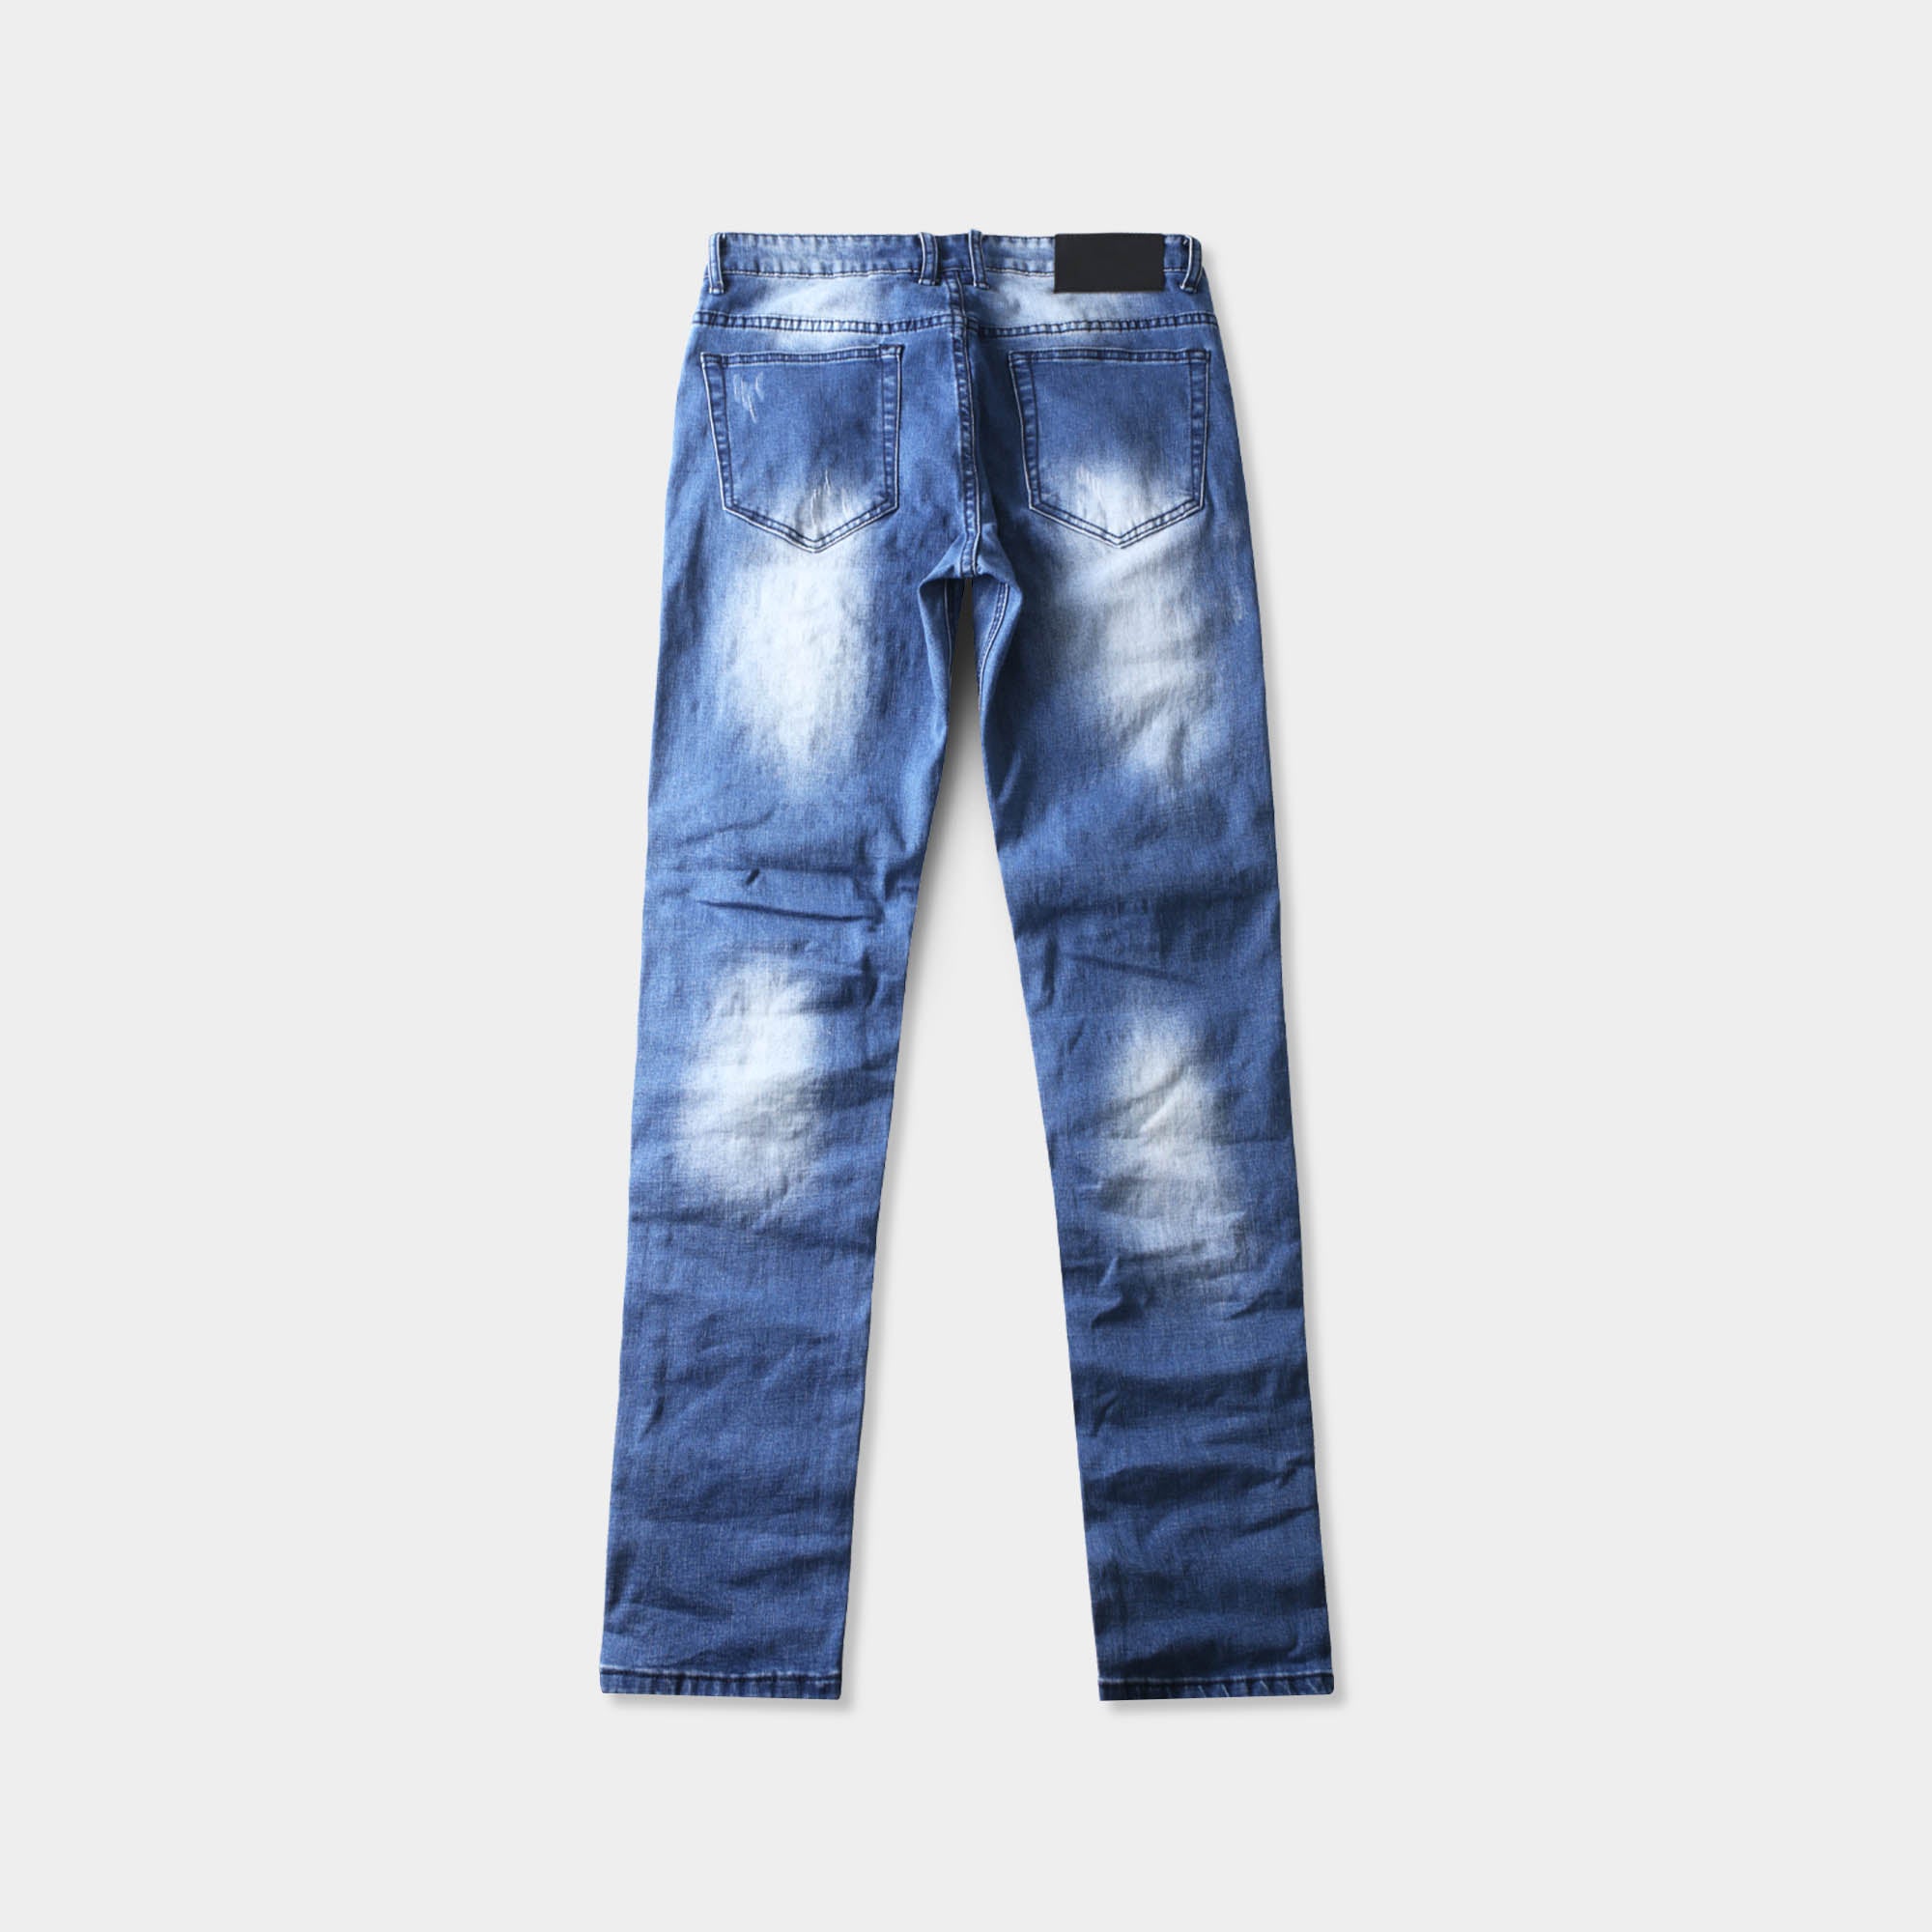 Brandmand Do lugtfri Men's Fashion Distressed Biker Jeans - Pants | Hat and Beyond